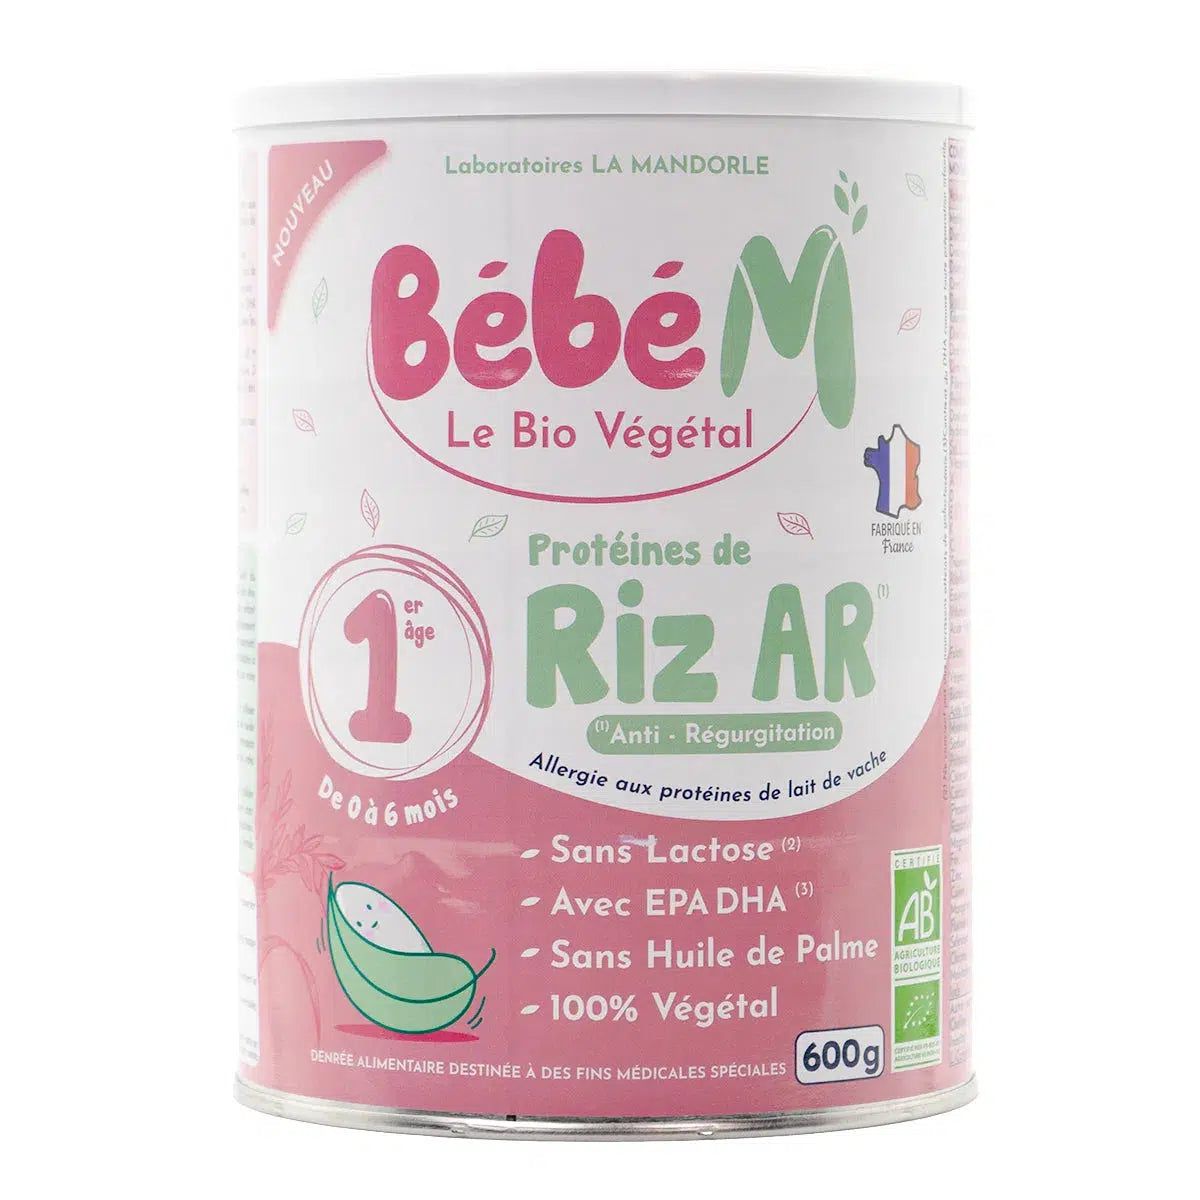 Bebe M (Bebe Mandorle) Organic Anti-Reflux Rice-Based Infant Formula - Stage 1 (0 to 6 months) - (600g)